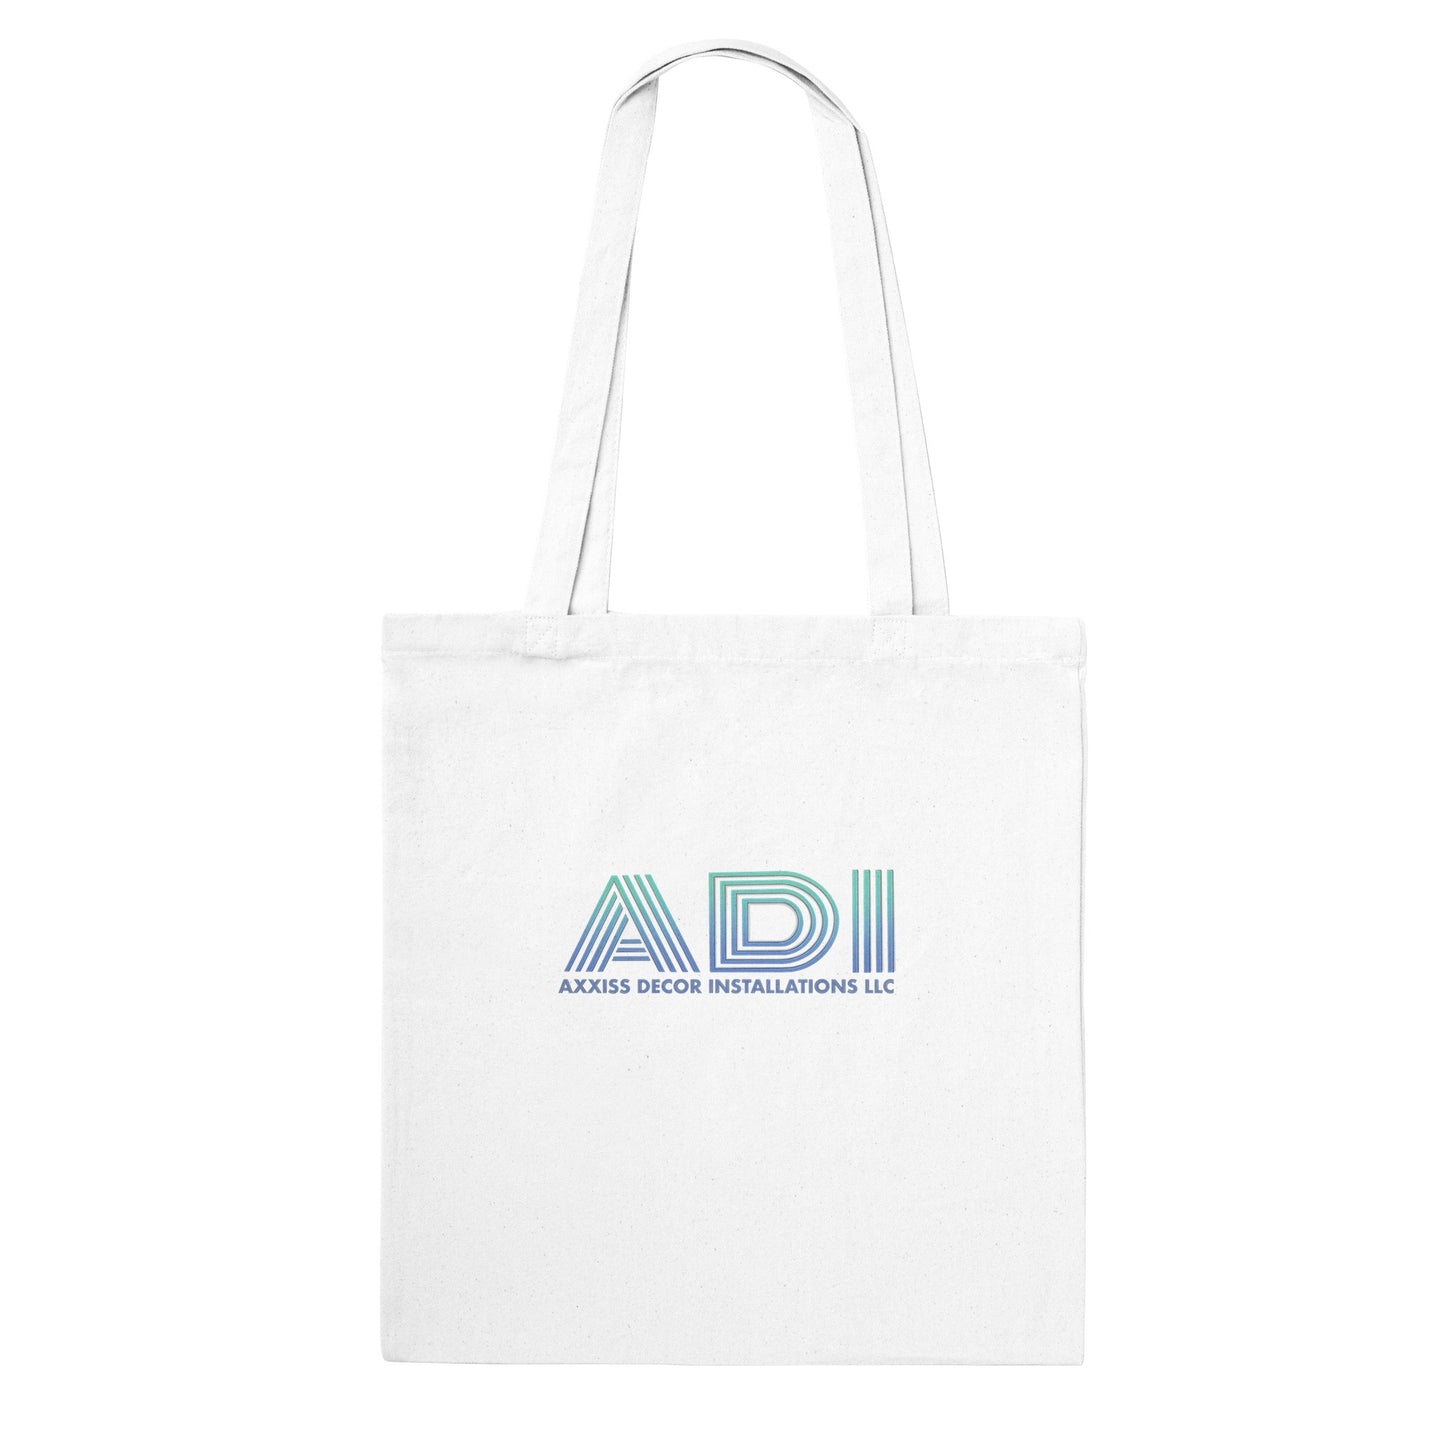 ADI-Axxis Decor Installations, LLC - Classic Tote Bag